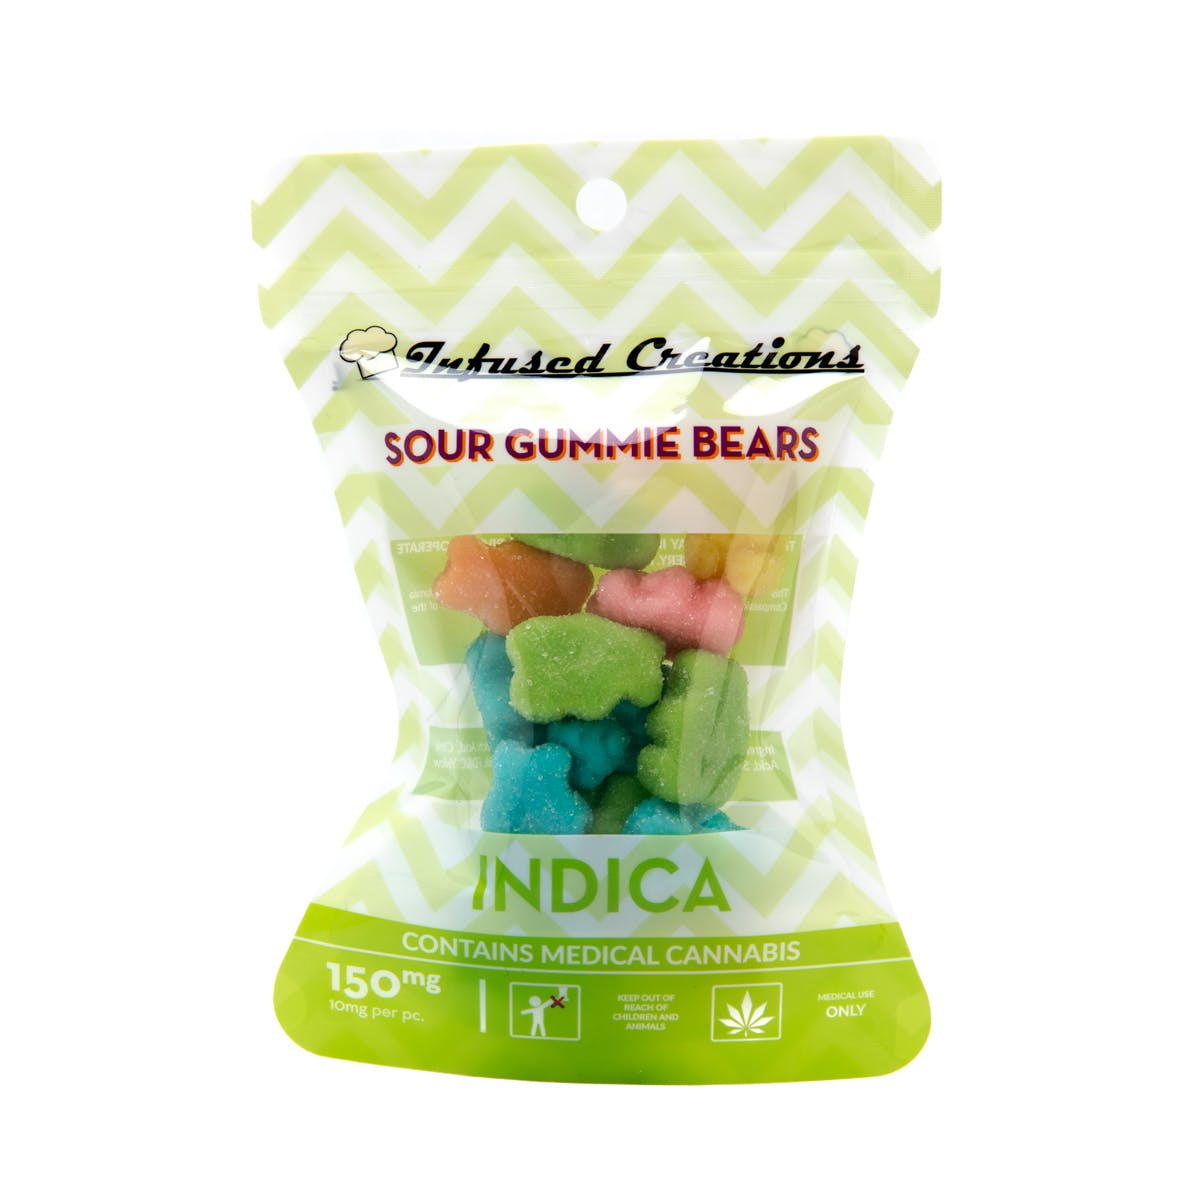 Sour Gummi Bears Indica, 150mg